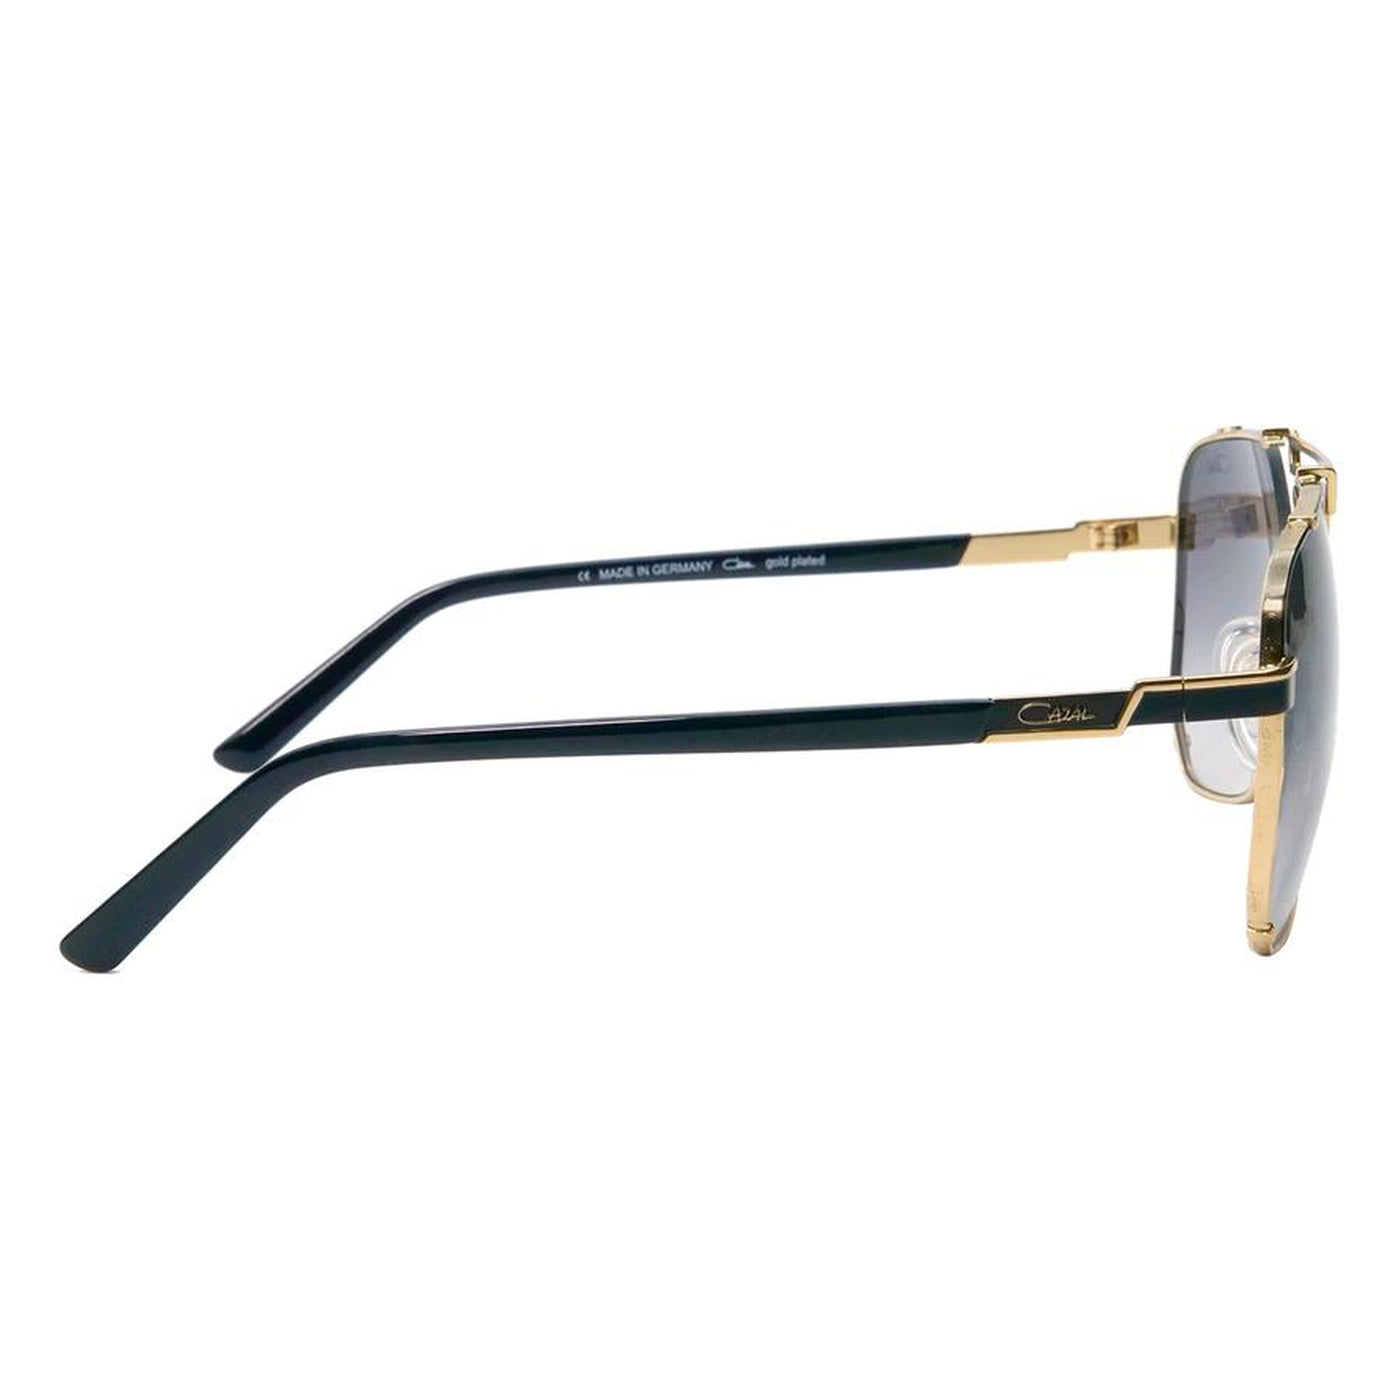 CAZAL Sunglasses 9090-Sunglasses-Topline Eyewear